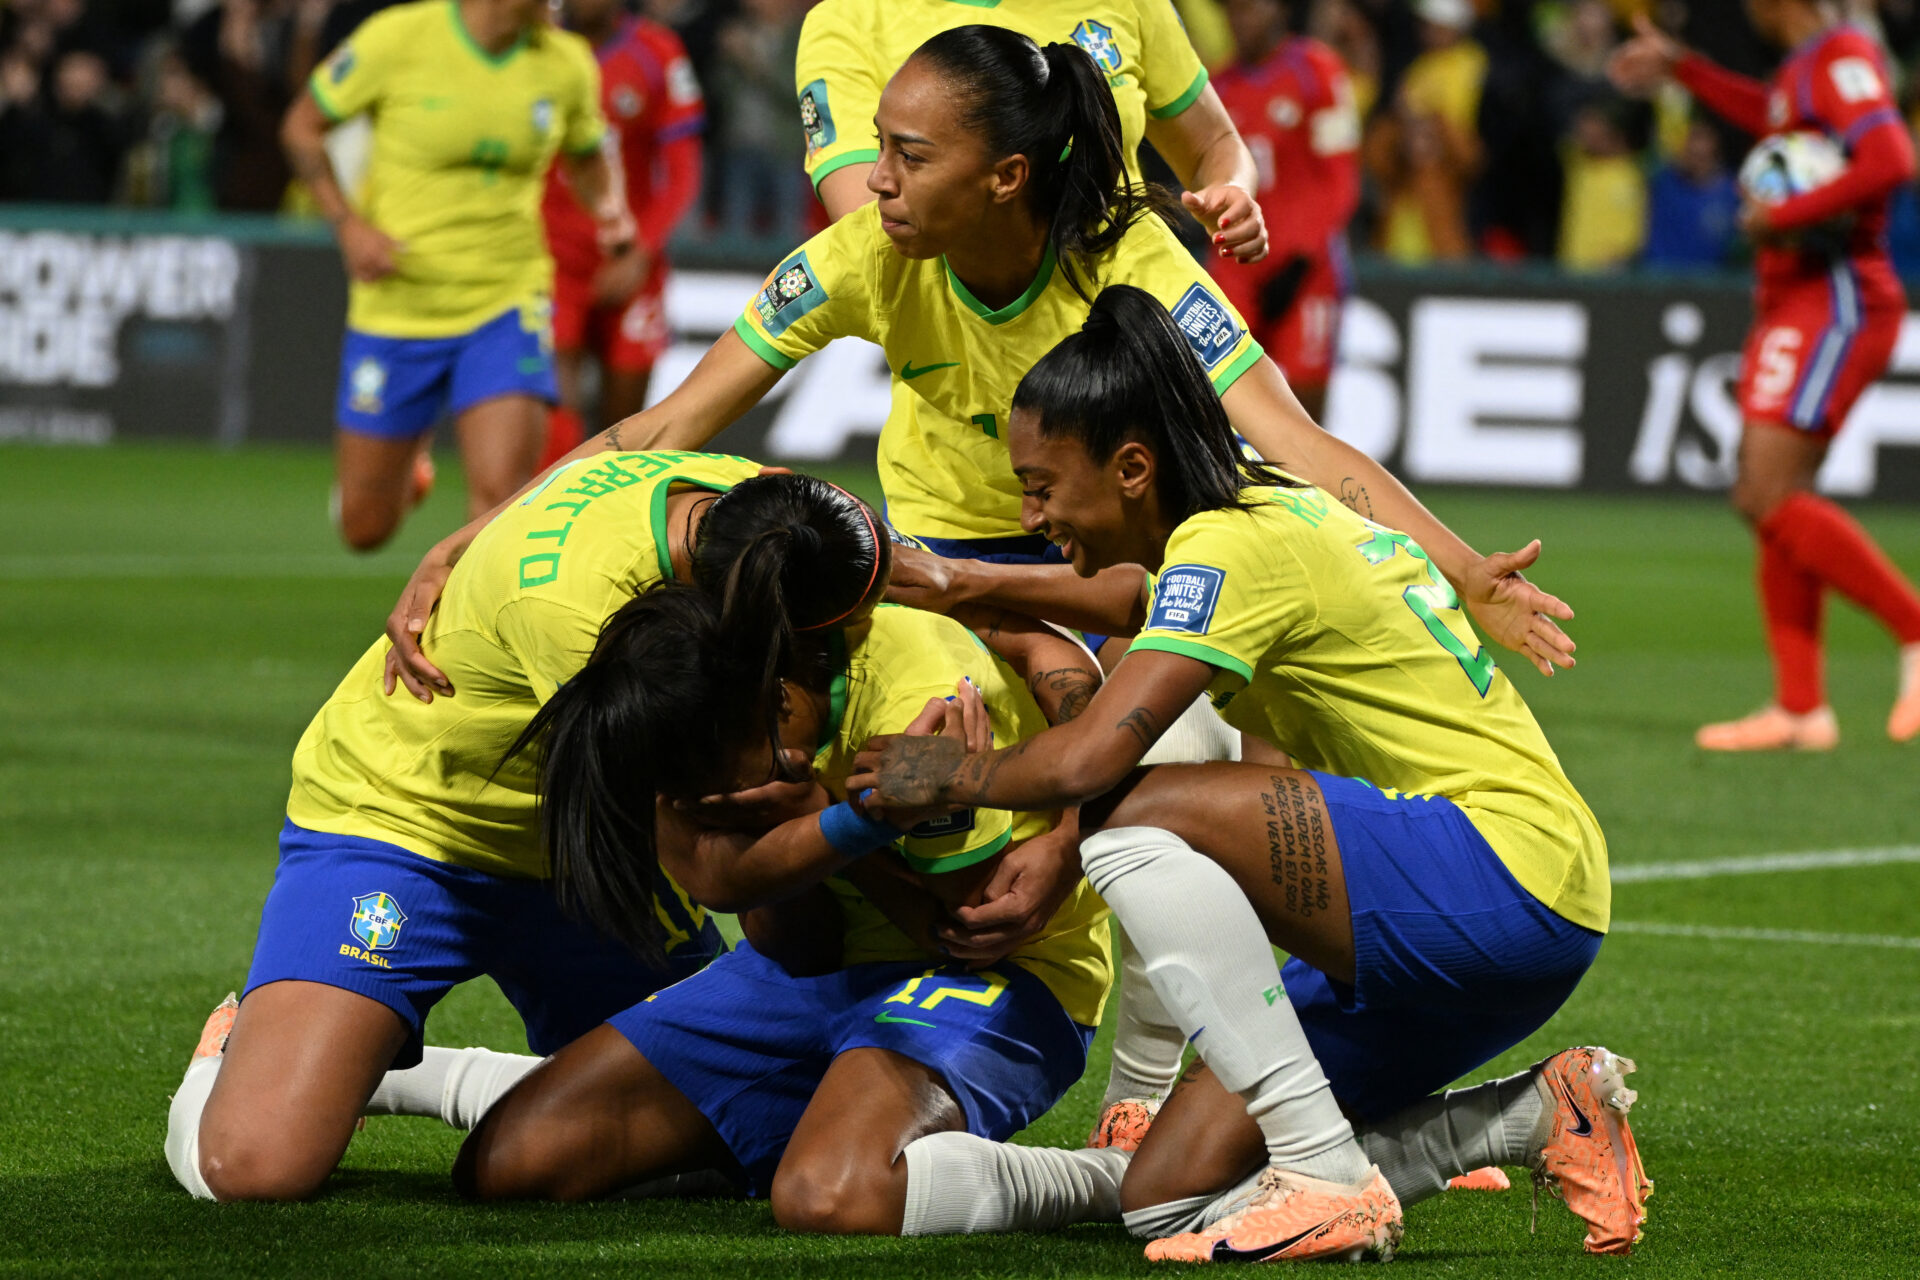 Copa do Mundo Feminina: a virada do jogo nas empresas - Portal Aberje